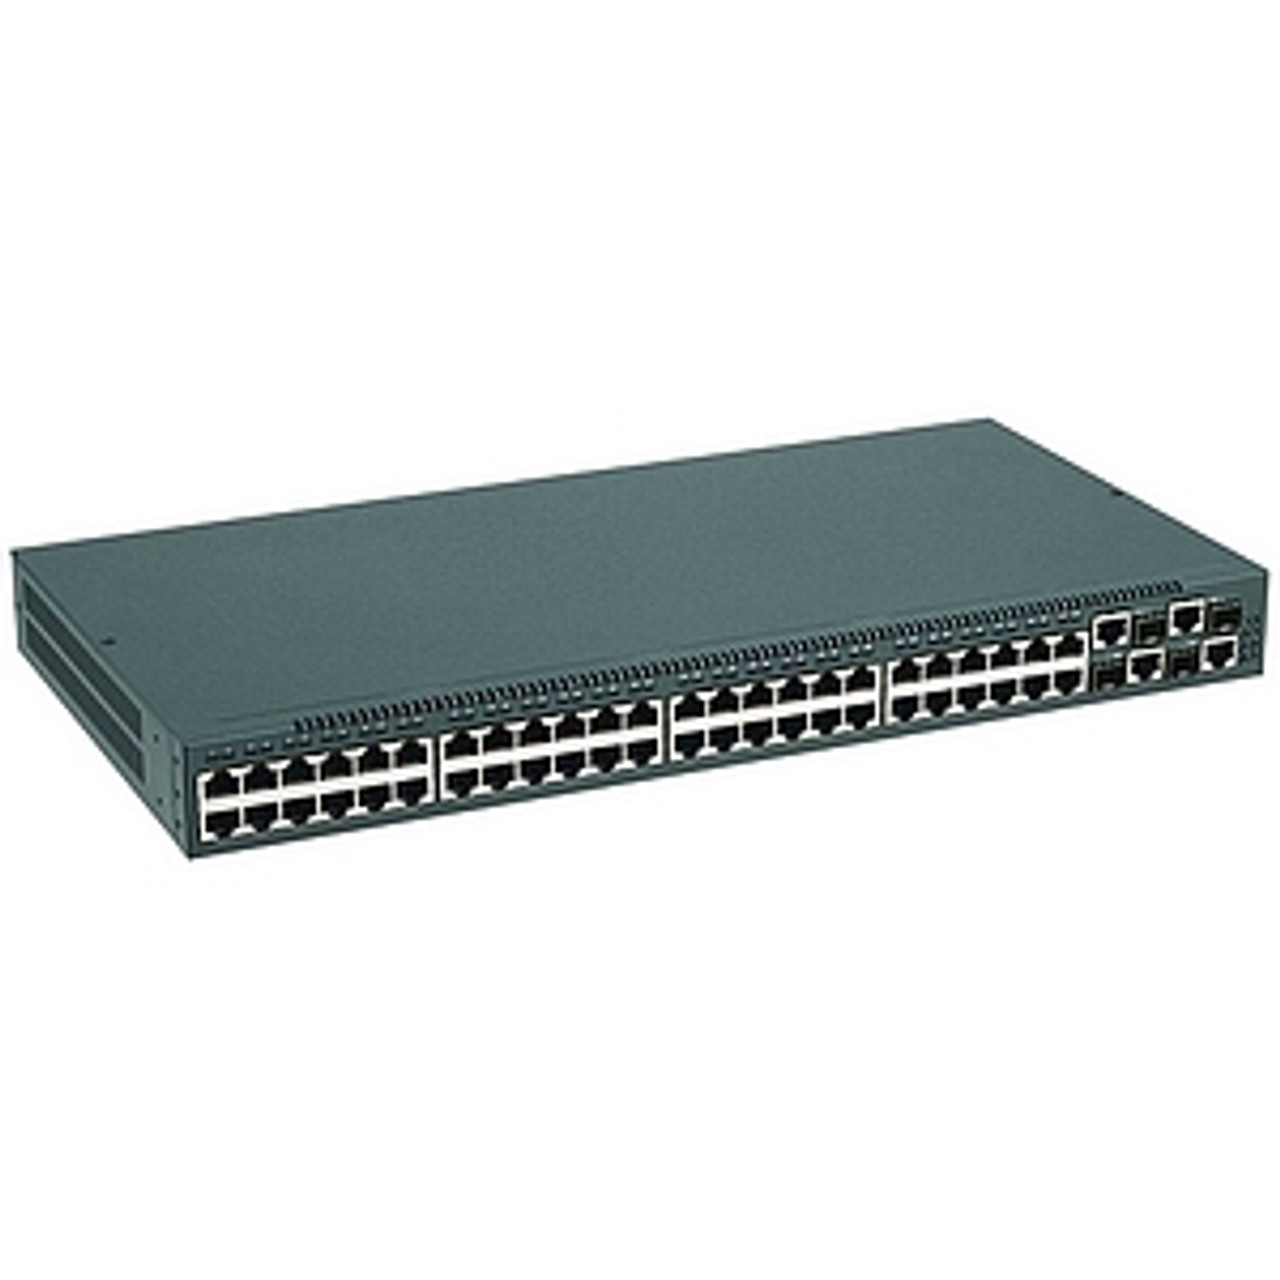 SMC6152L2 SMC TigerSwitch SMC6152L2 Managed Layer 2 Ethernet Switch 48-Ports Manageable 48 x RJ-45 4 x Expansion Slots 10/100/1000Base-T (Refurbished)